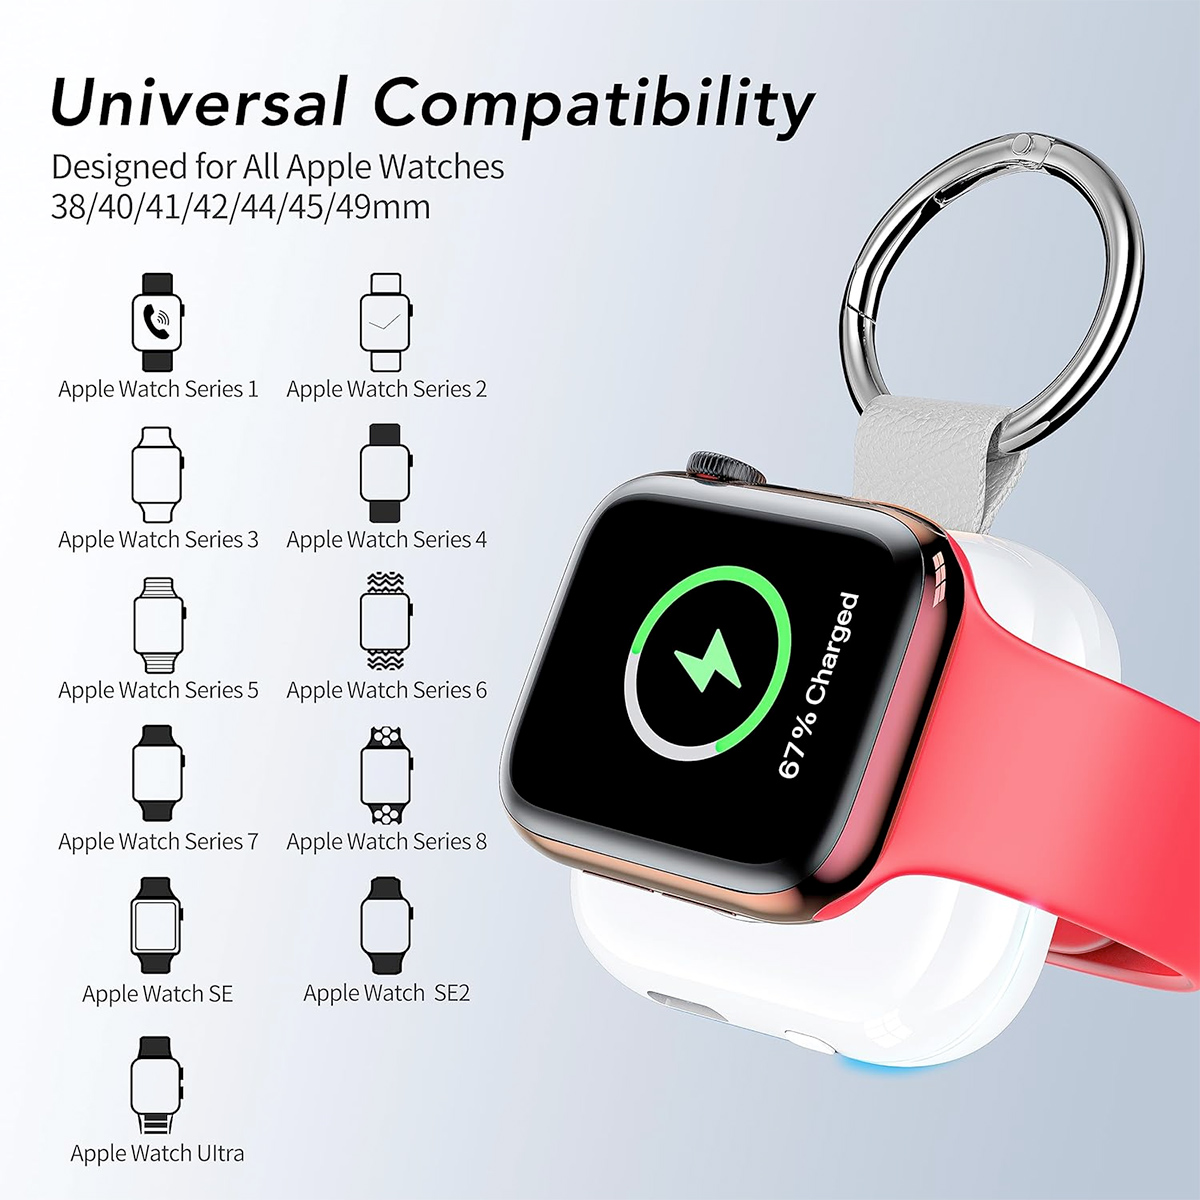 Chaveiro Huoto Magnetic Charger mini power bank para Apple Watch